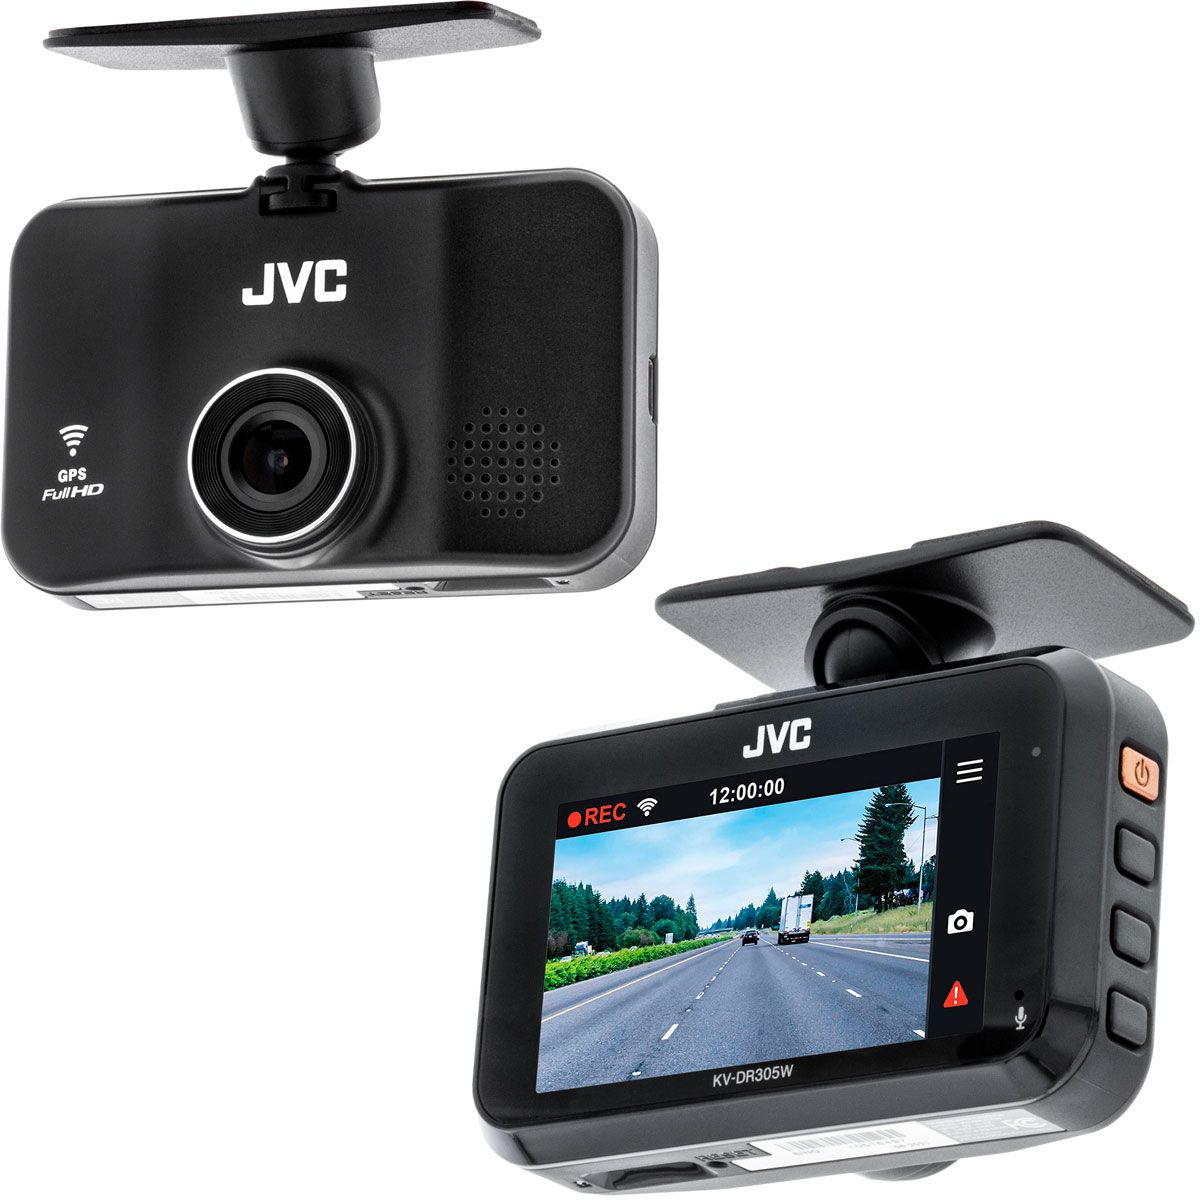 JVC KV-DR305W 1920x1080p Full HD Recorder GPS Dash Cam for Car, 2.7" LCD Screen Dashboard Camera, Built-in Wi-Fi, 3-Axis G-Force Sensor, Night Enhancement WDR, Includes 16GB Class 10 microSD Card